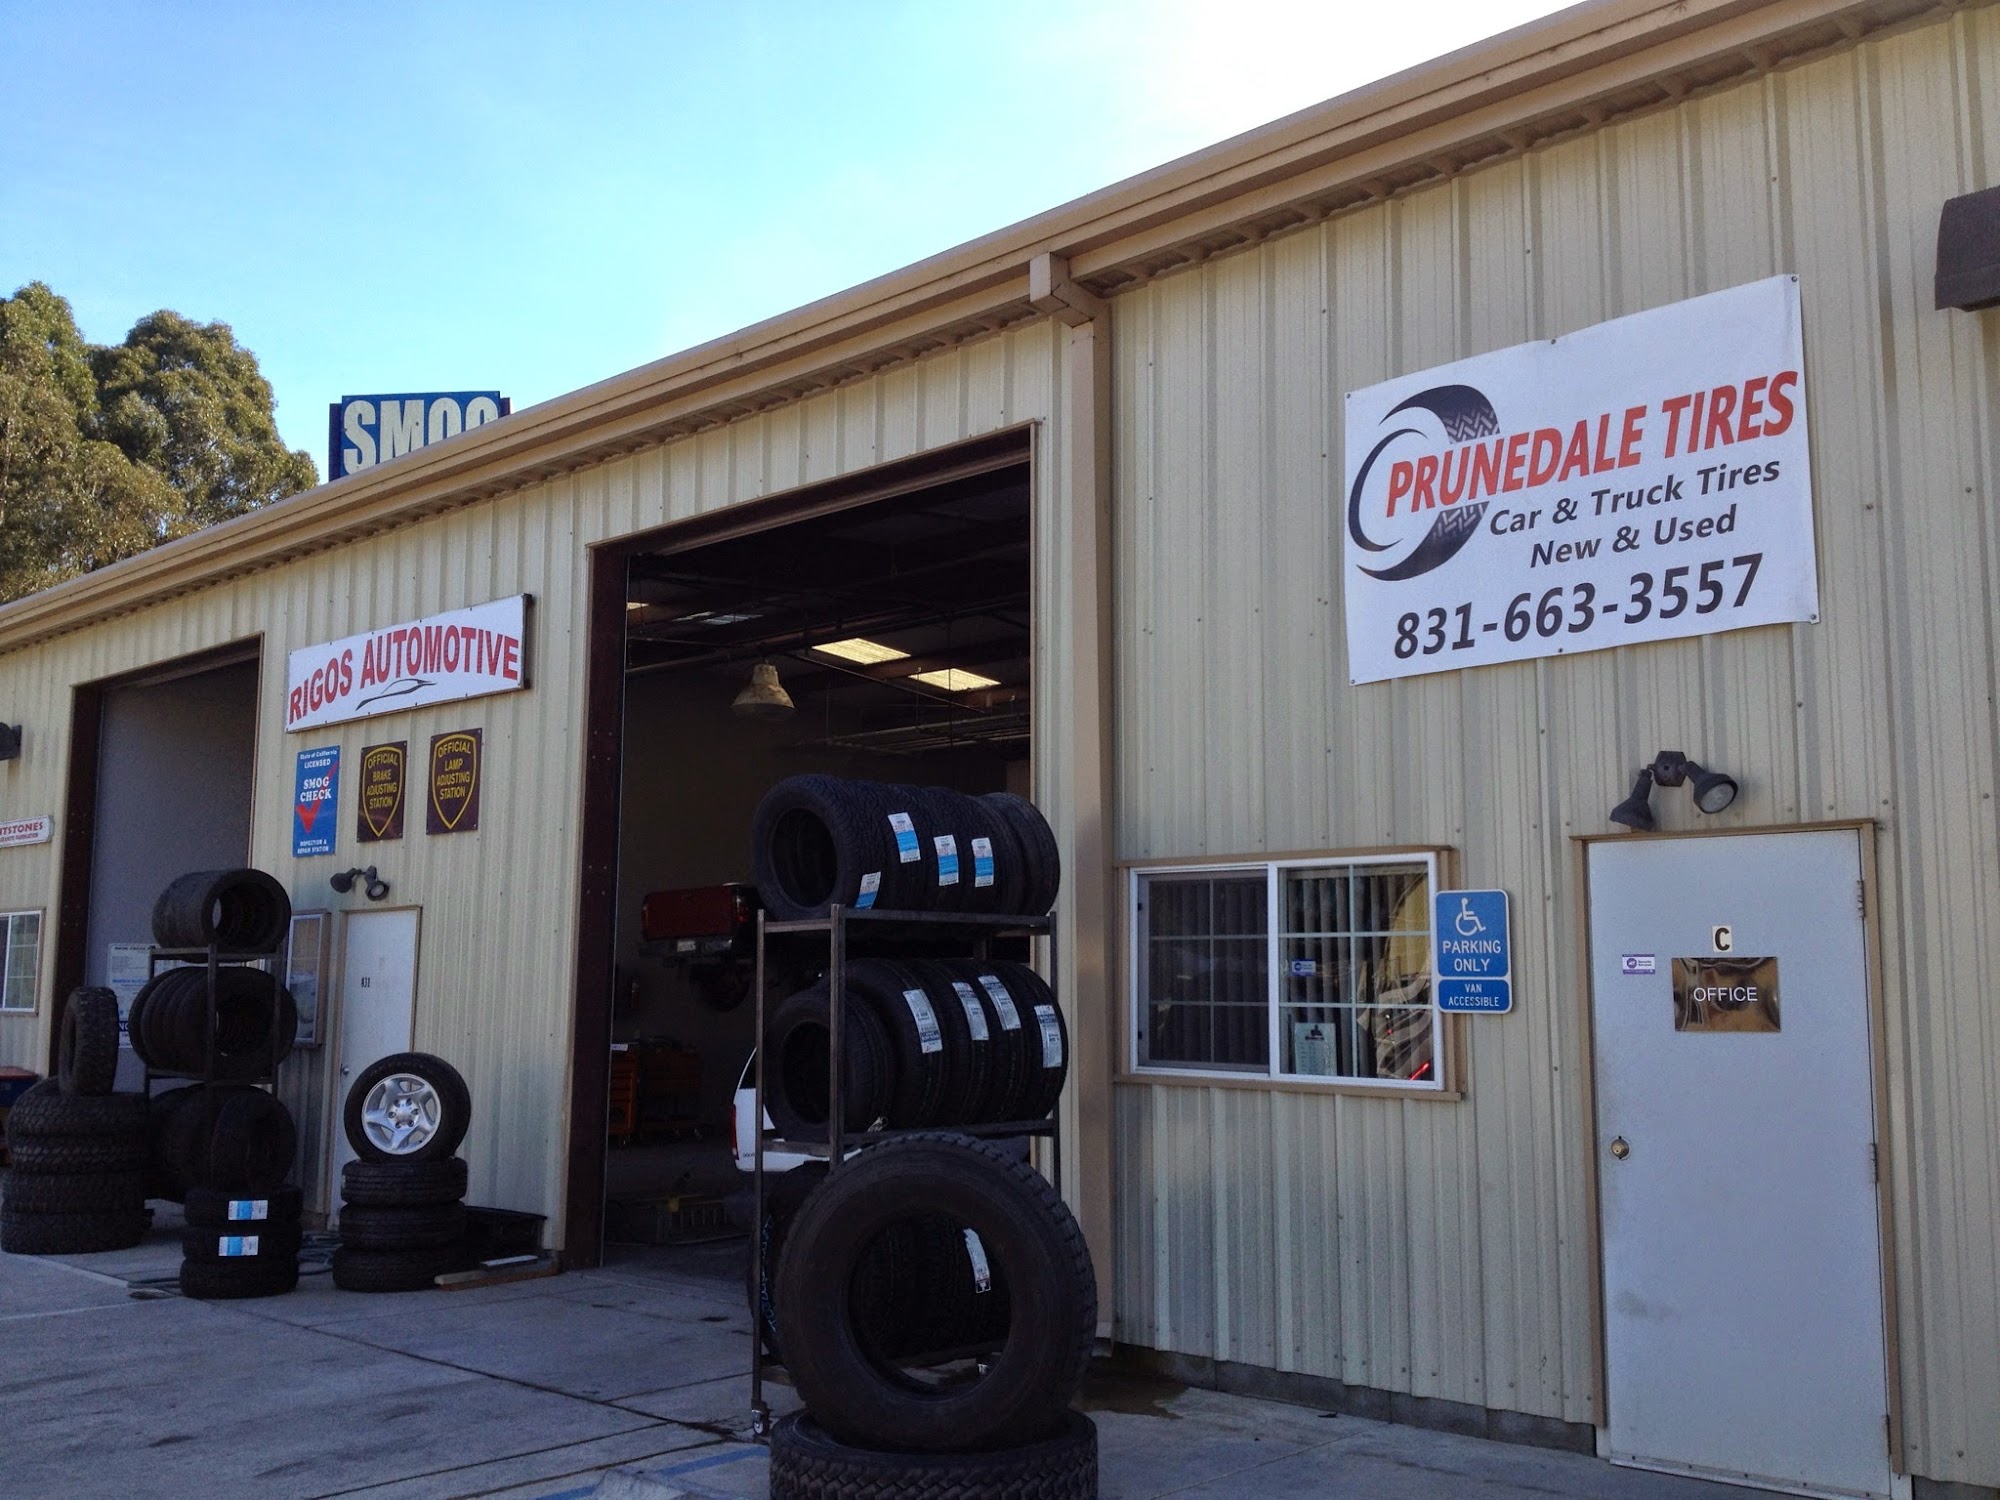 Prunedale Tires LLC